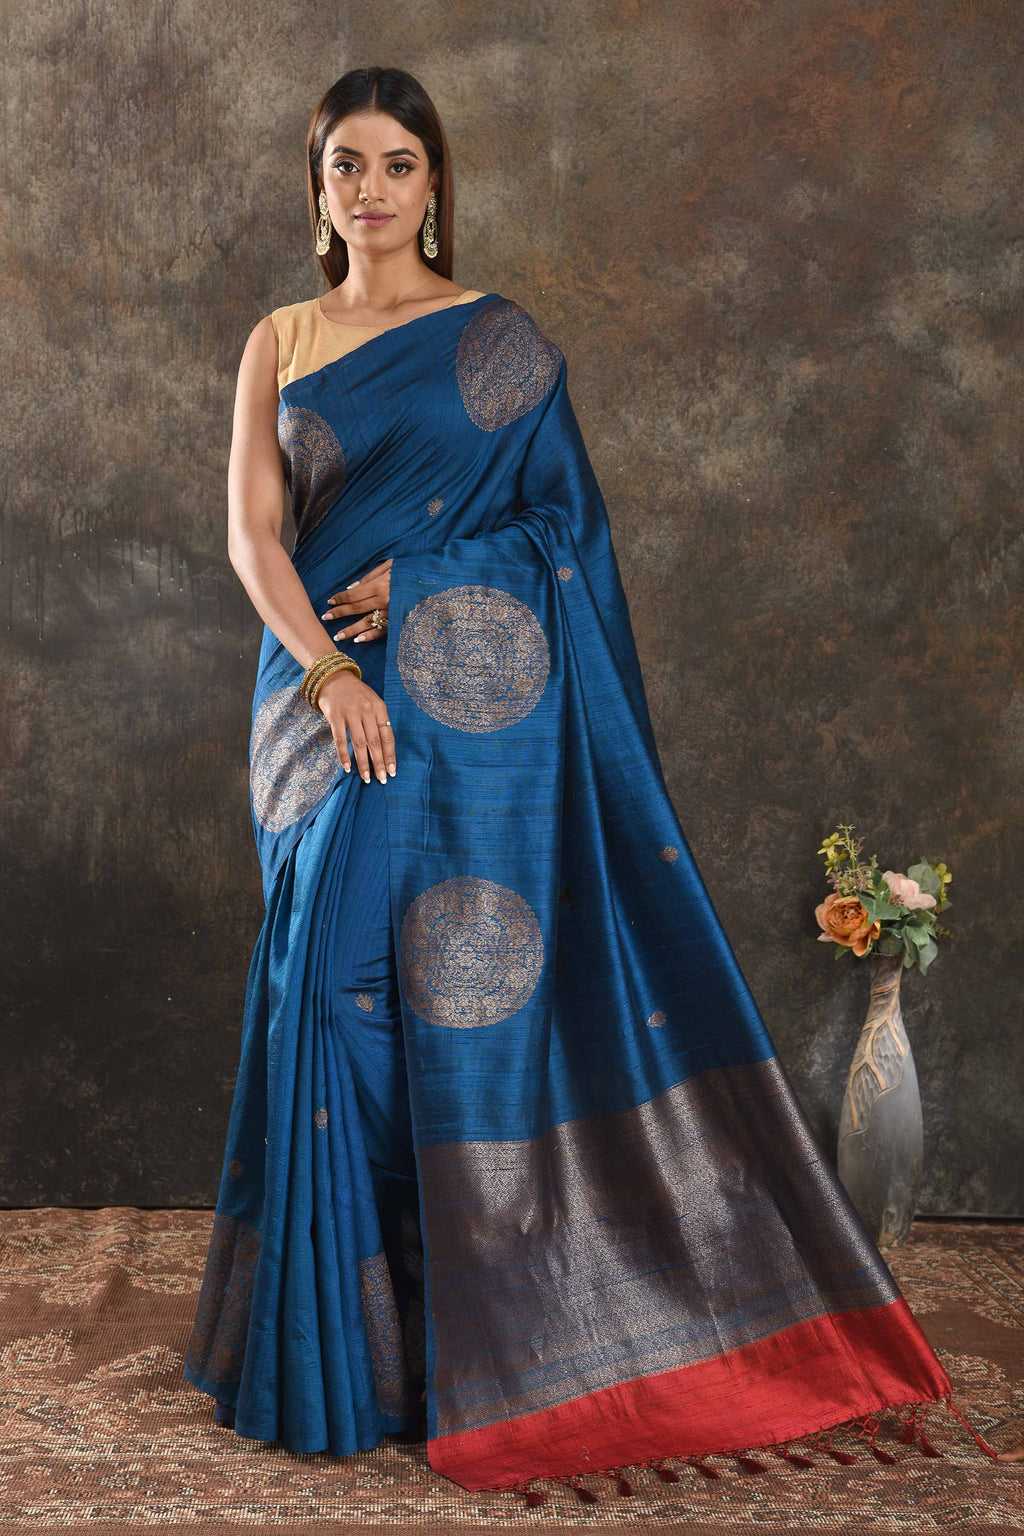 Buy royal blue tussar Banarasi sari online in USA with antiquqe zari buta. Be vision of elegance on special occasions in exquisite designer sarees, handwoven sarees, georgette sarees, embroidered sarees, Banarasi saree, pure silk saris from Pure Elegance Indian saree store in USA.-full view